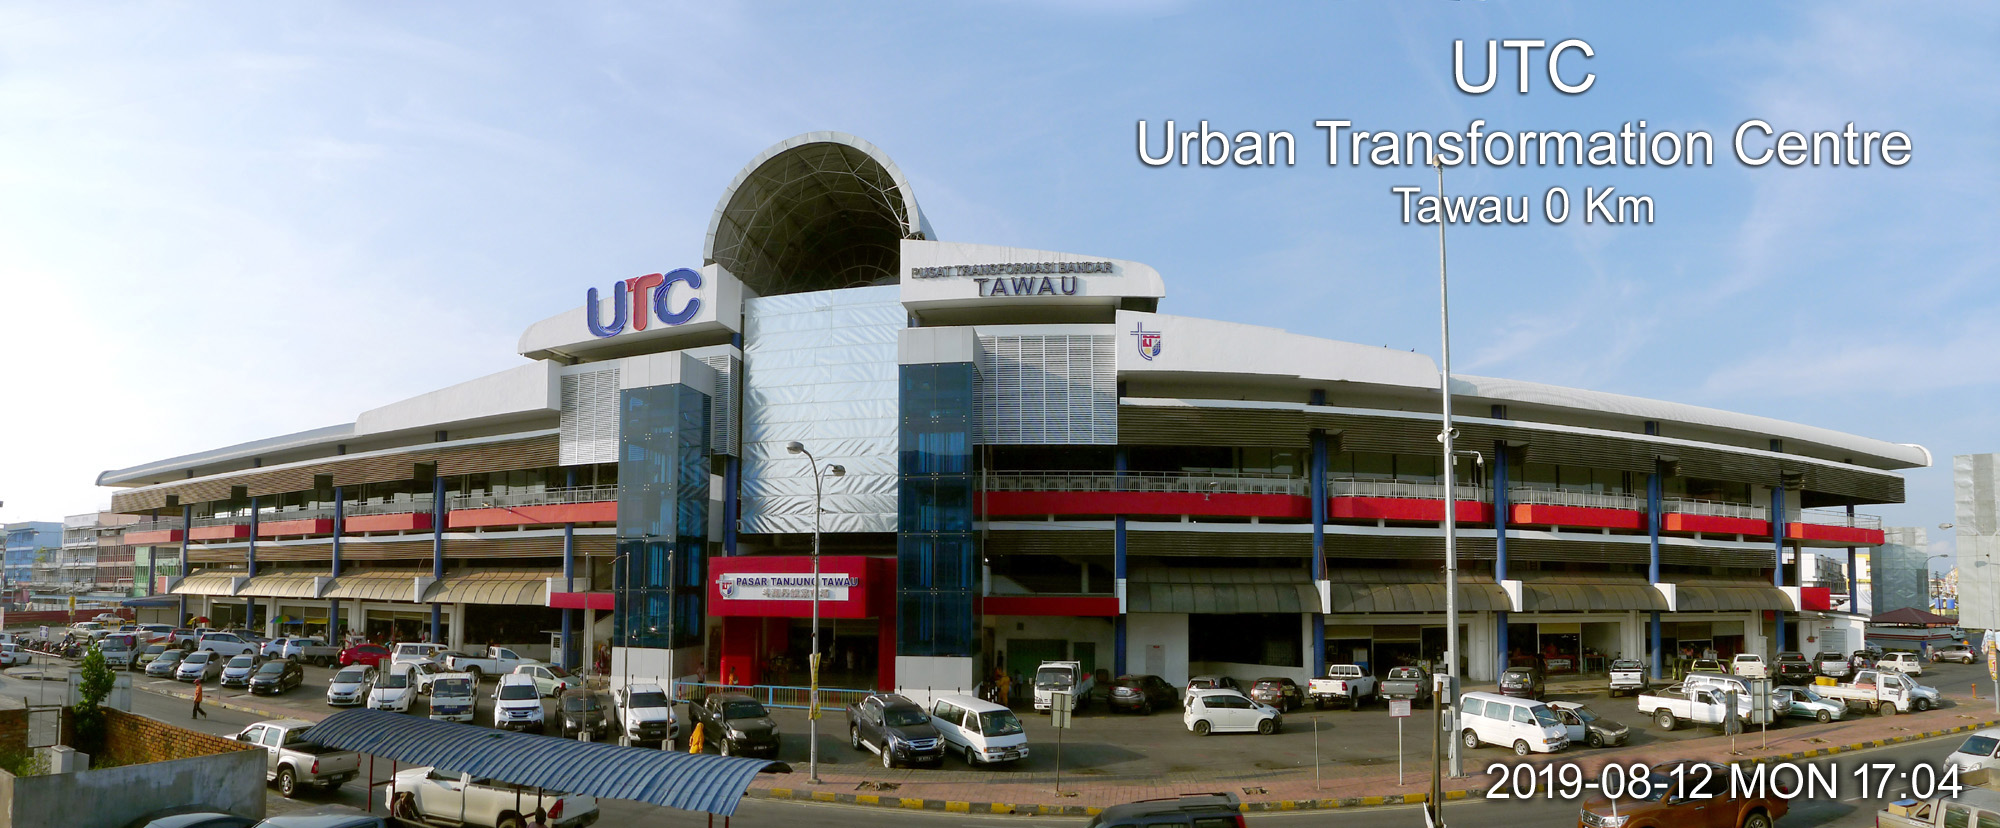 UTC - Urban Transformation Centre Tawau